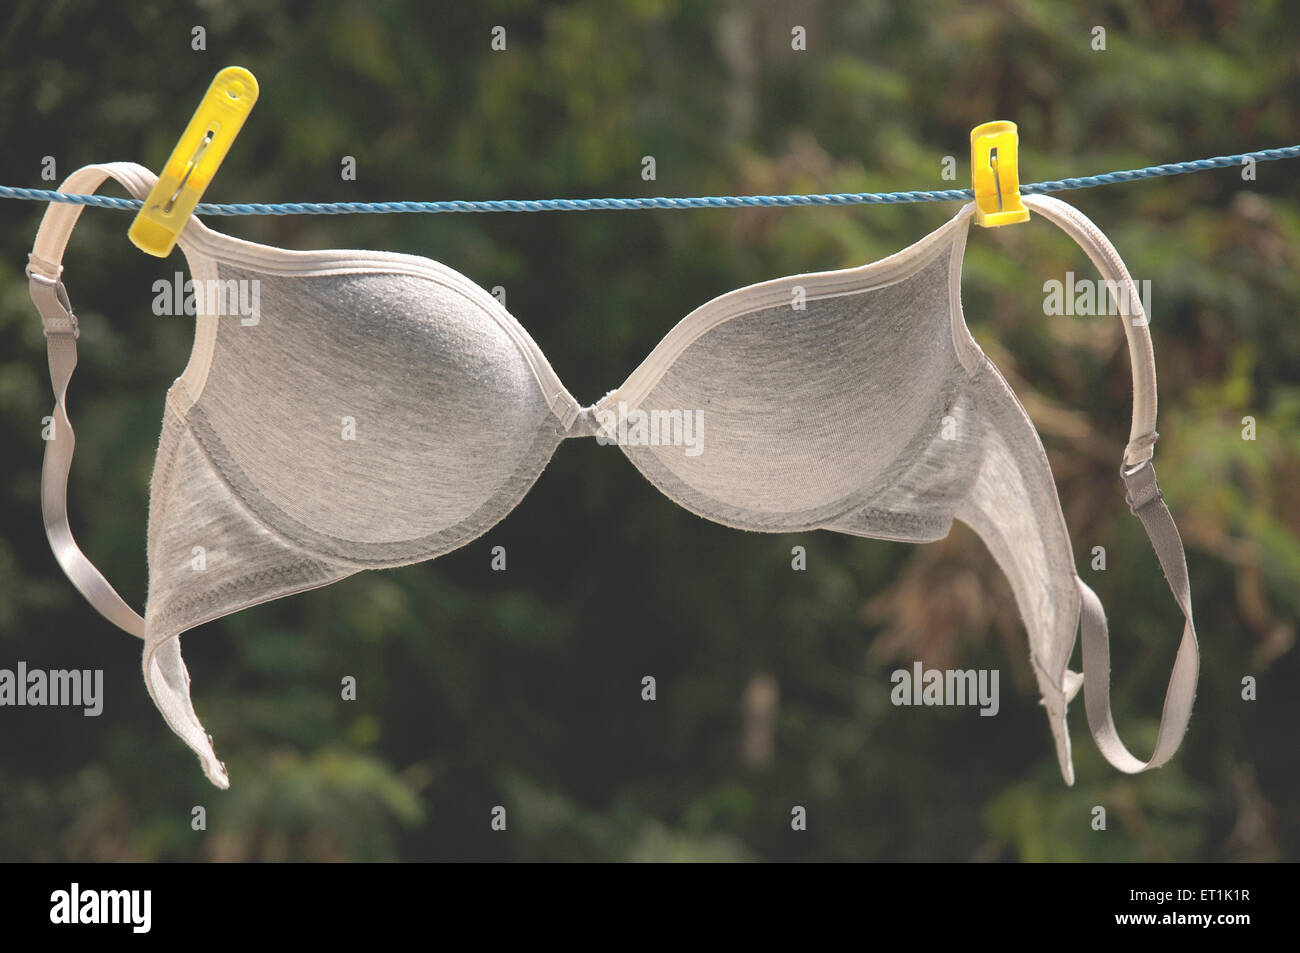 bra padded brassiere undergarment drying Stock Photo